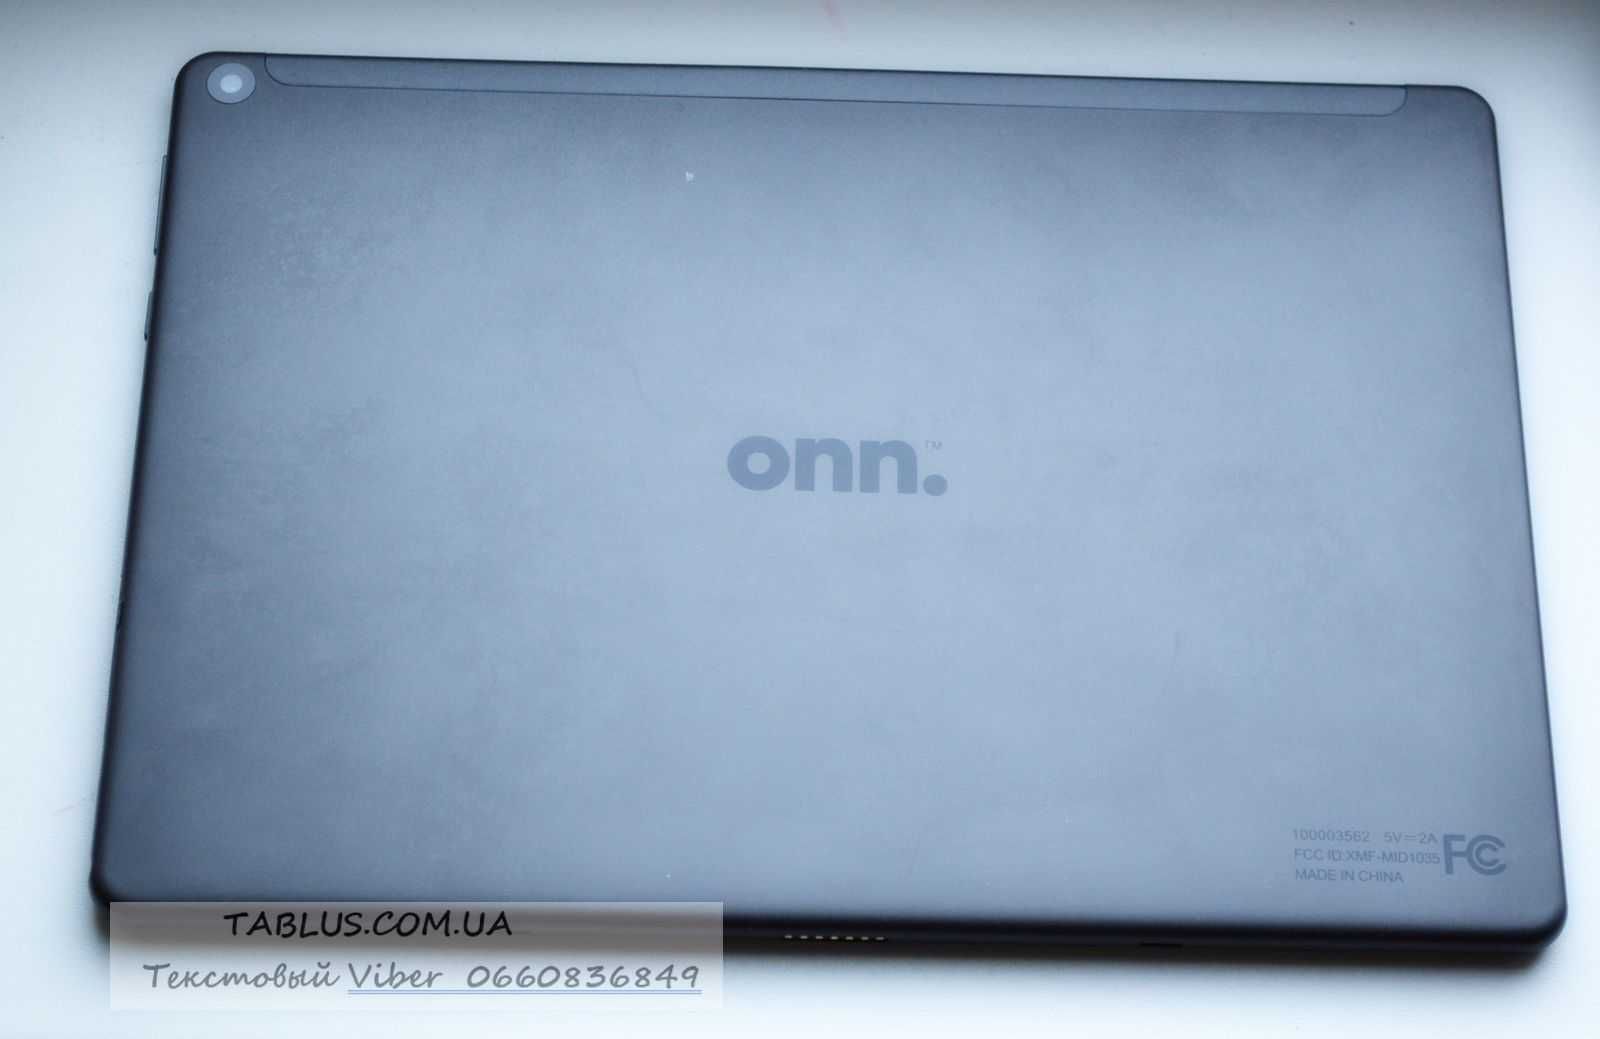 ONN Pro! Мощный 10" FullHD планшет 3 Гб.\32 ГБ.! Android 10\11! 8 ядер